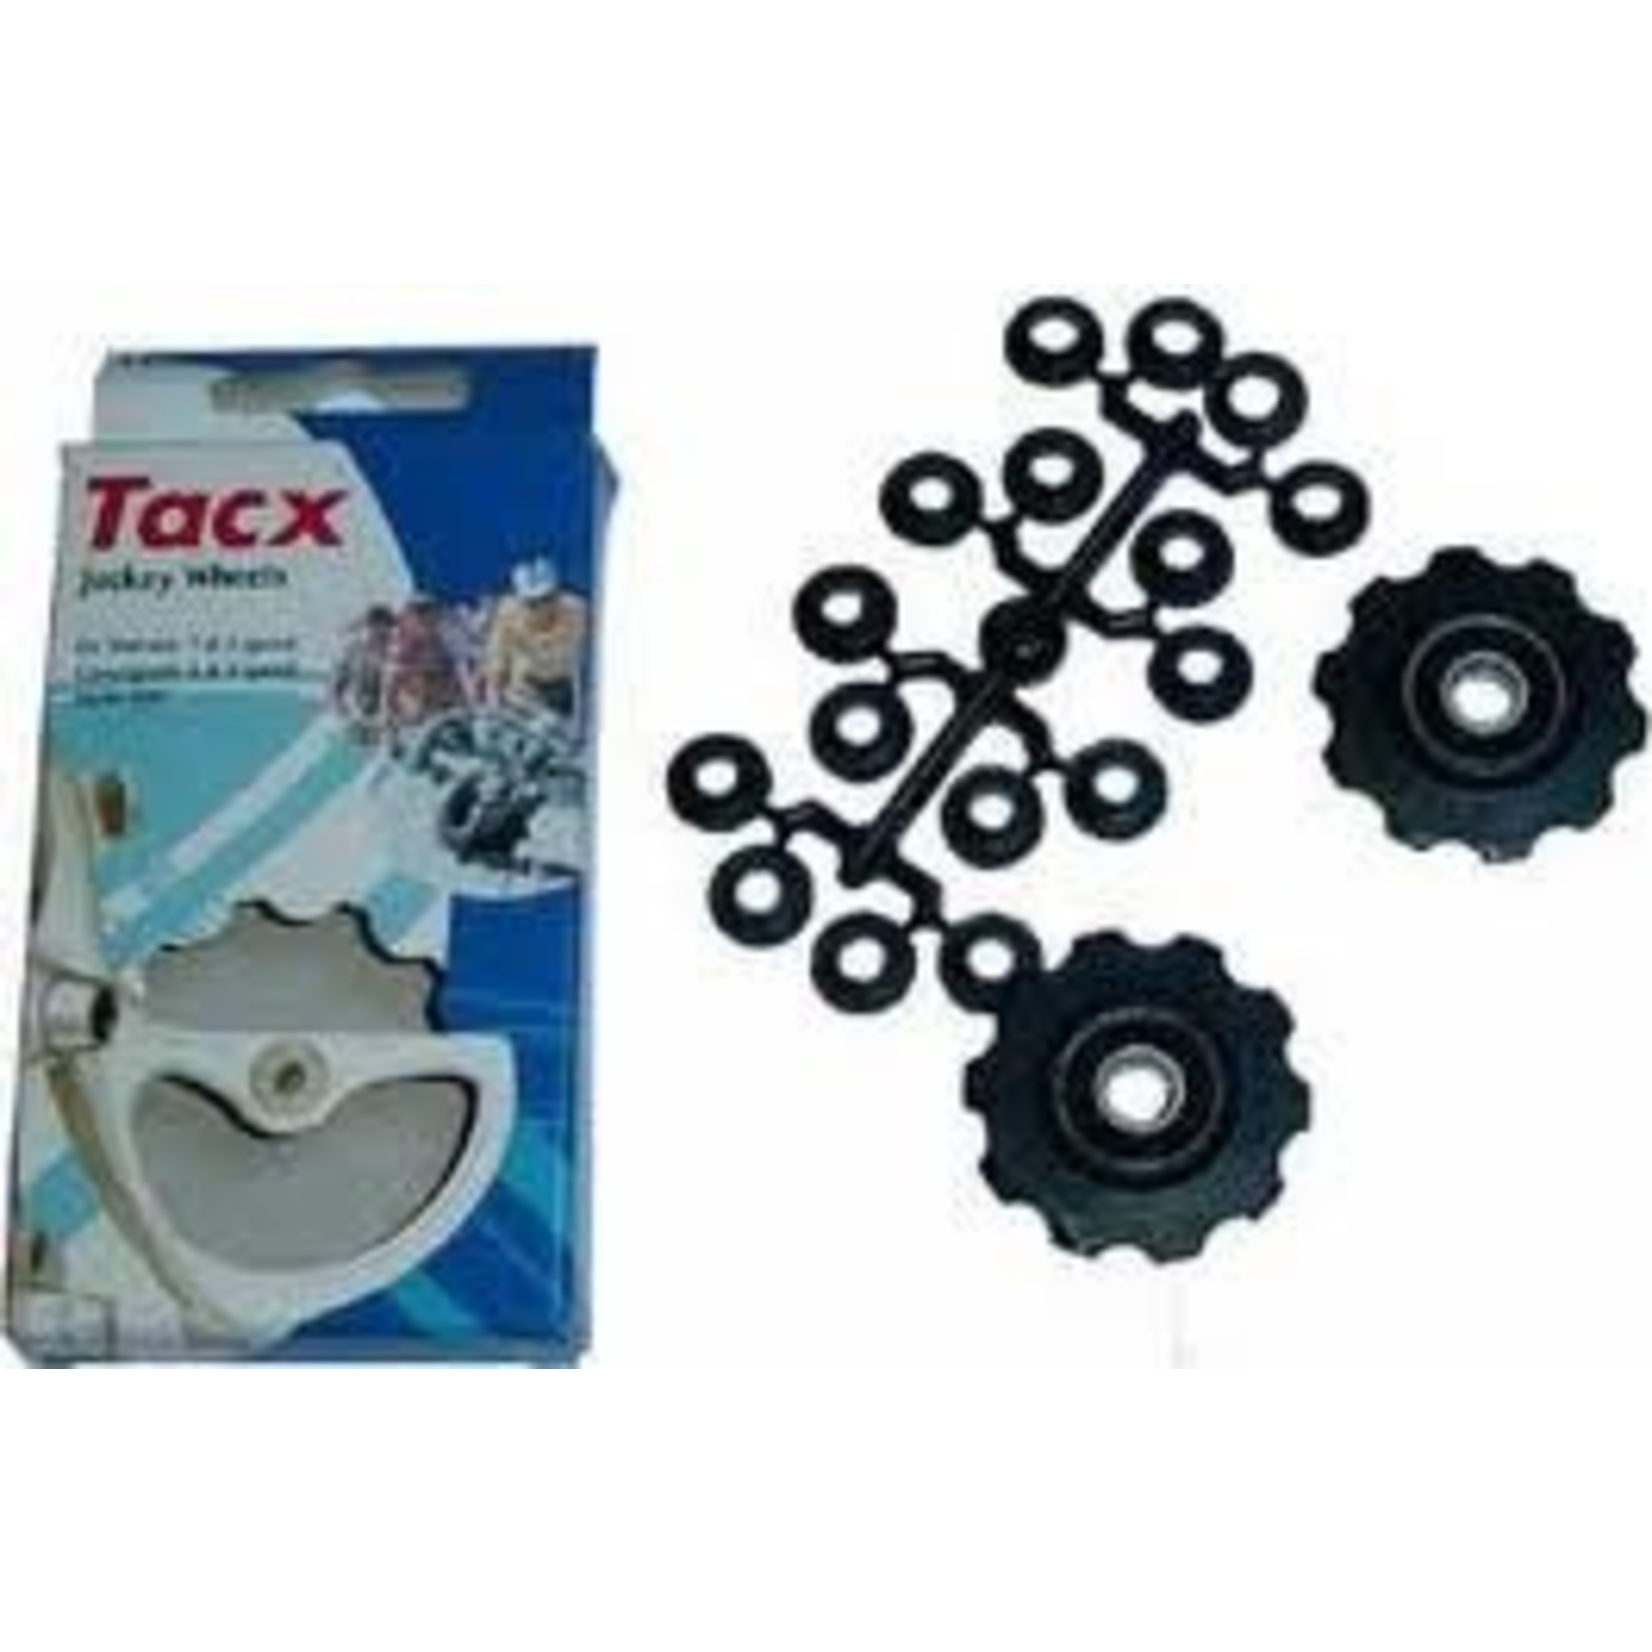 Tacx Tacx Jockey Wheels Shimano 9 & 10 speed stainless bearings t4060